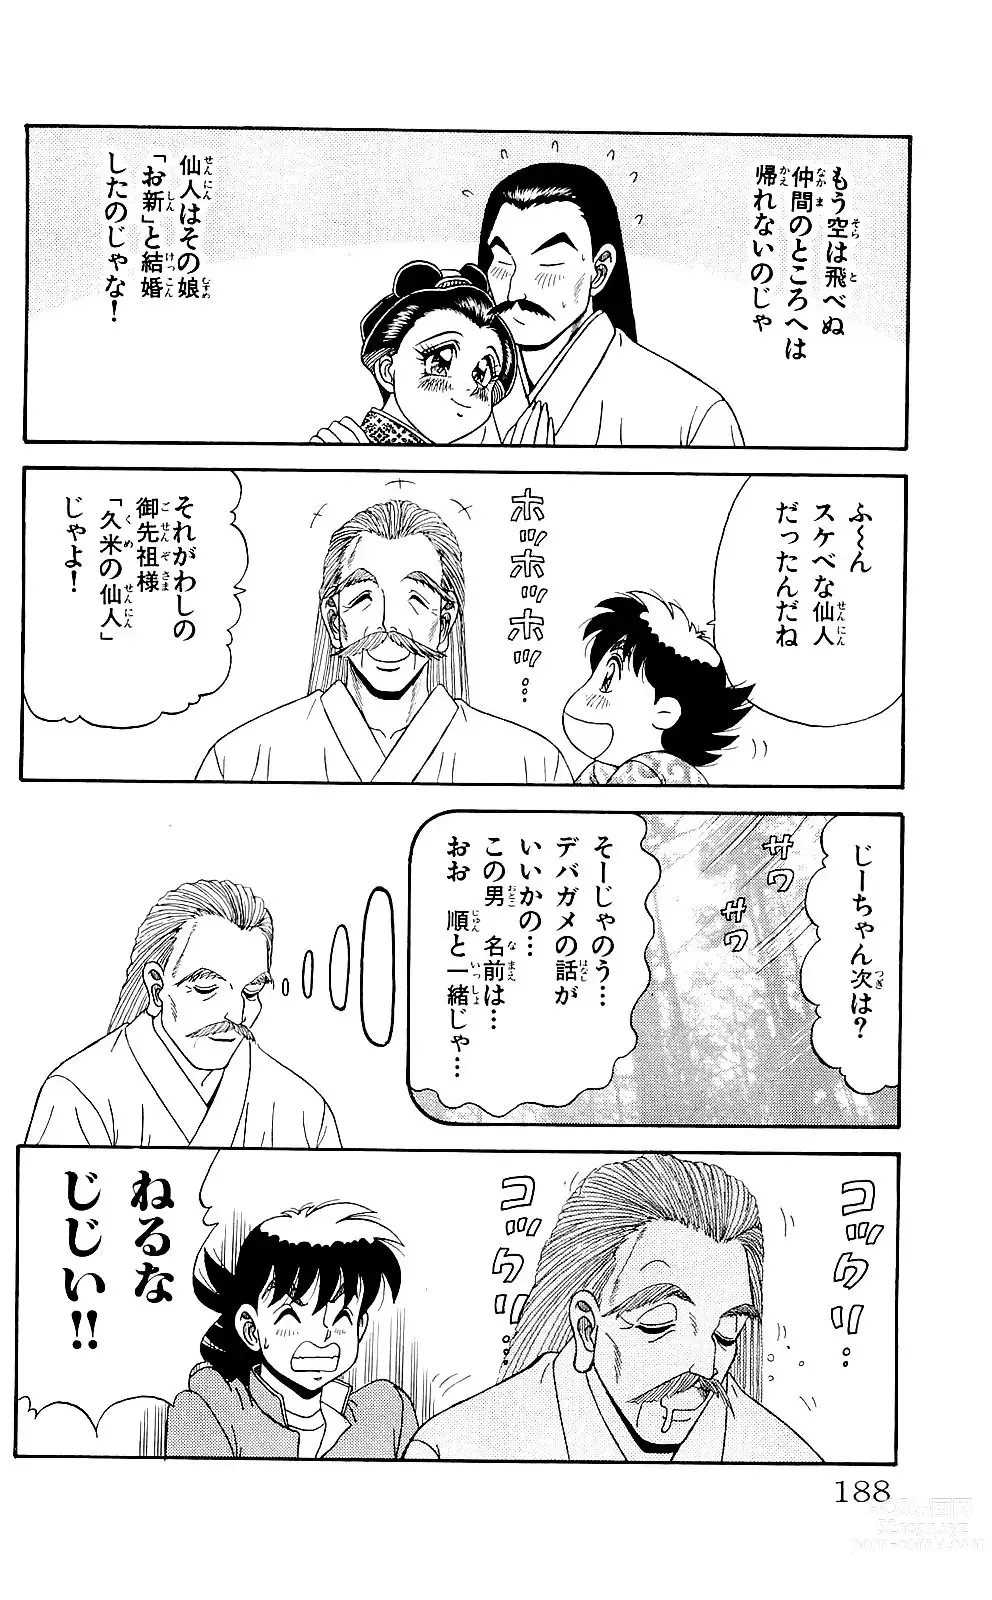 Page 186 of manga Orette Piyoritan 06